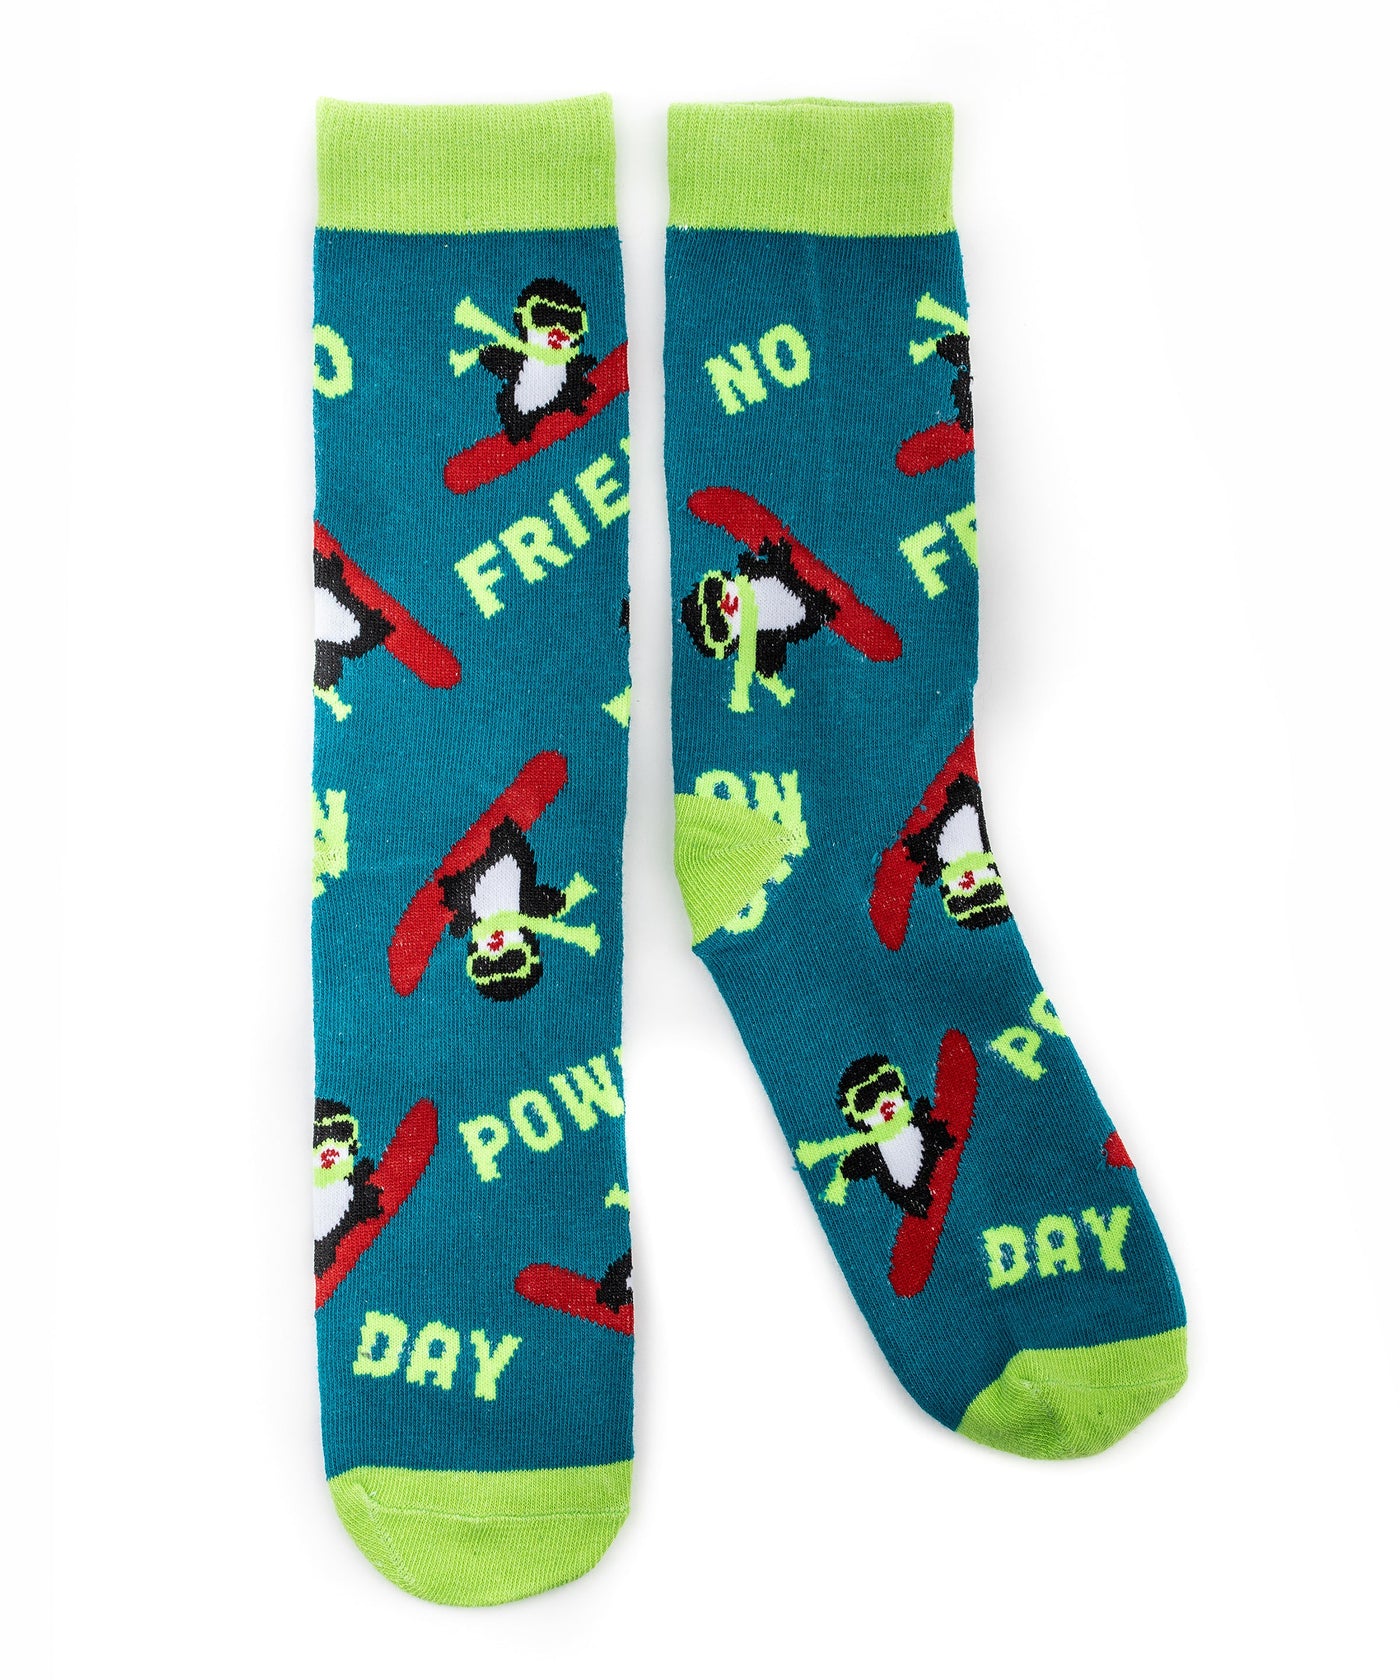 No Penguin Friends On A Powder Day Socks